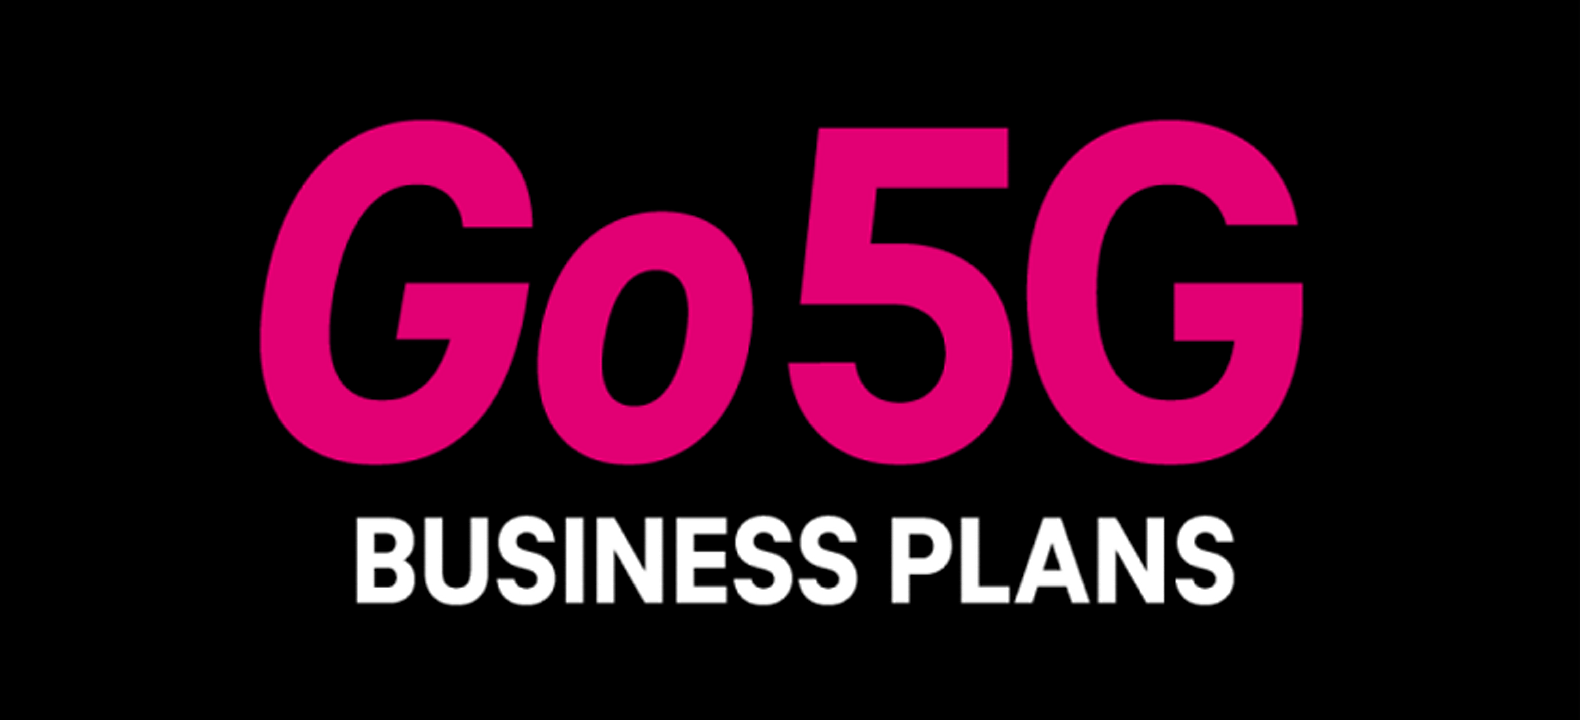 Go5G Business Plans logo